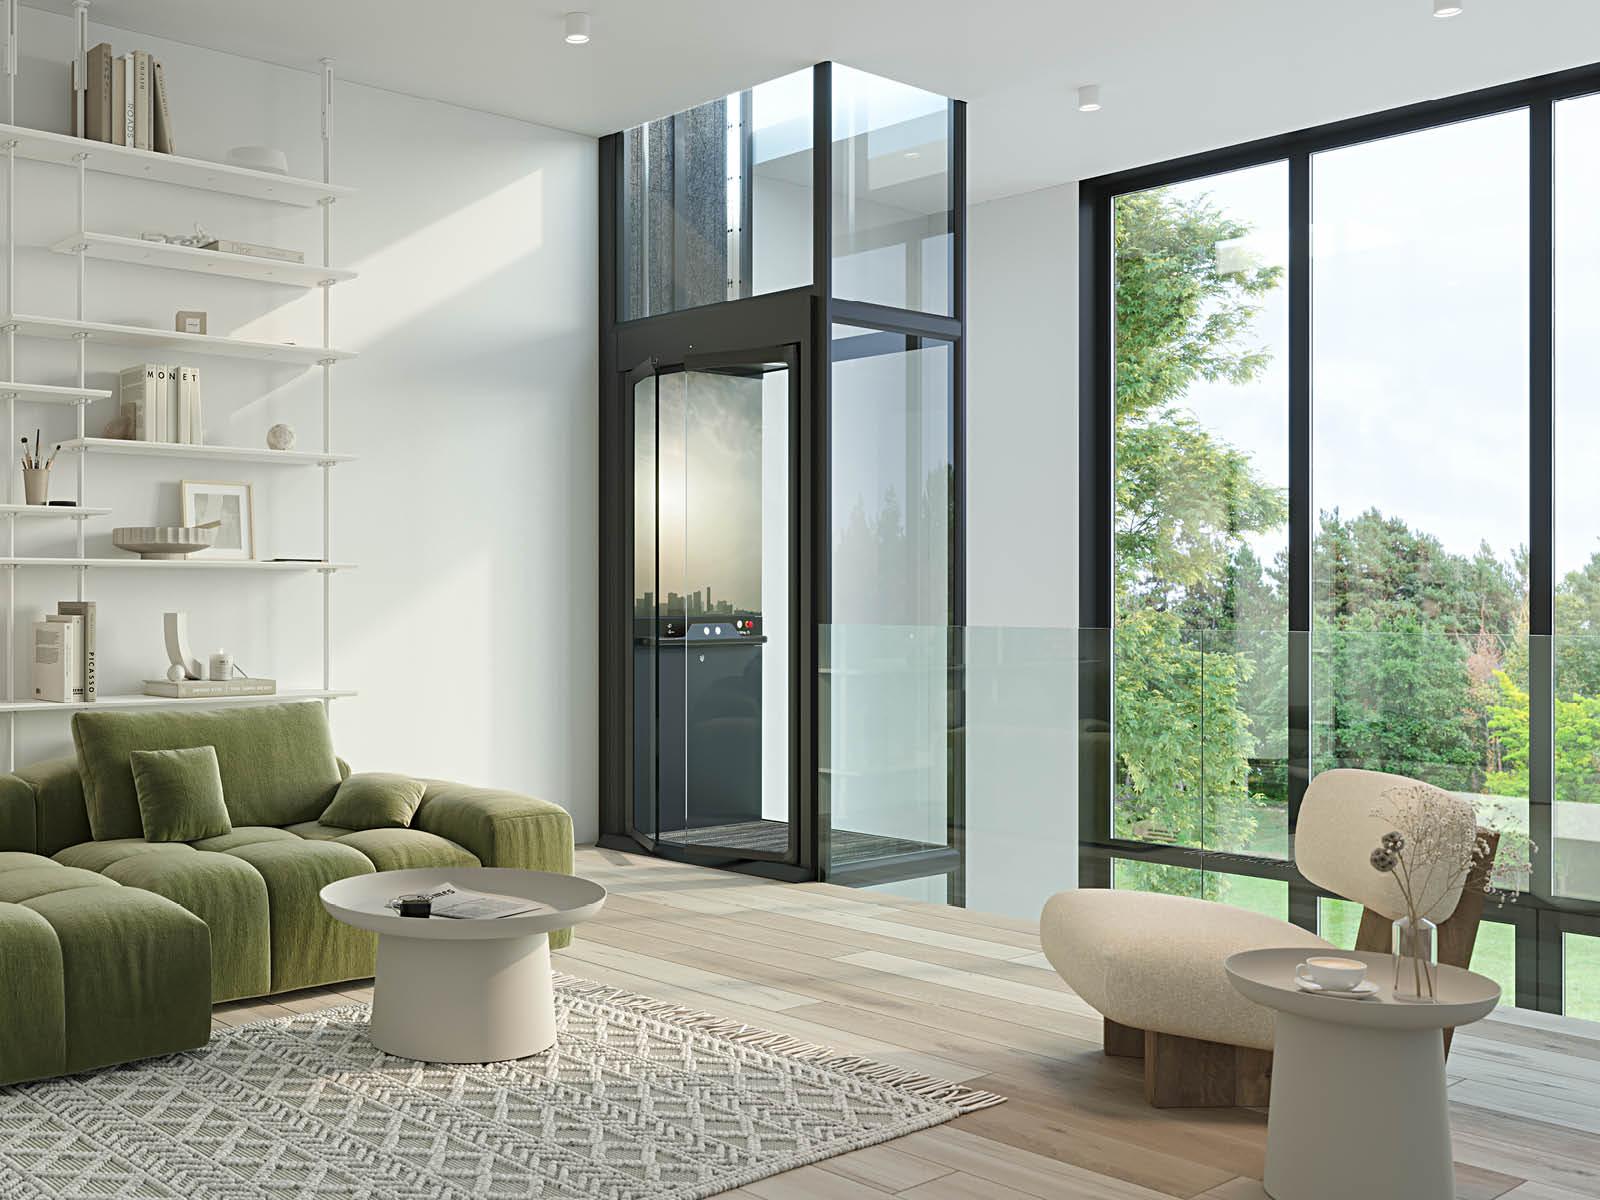 Home lift, elevator, in modern living room. Model: Aritco HomeLift Compact